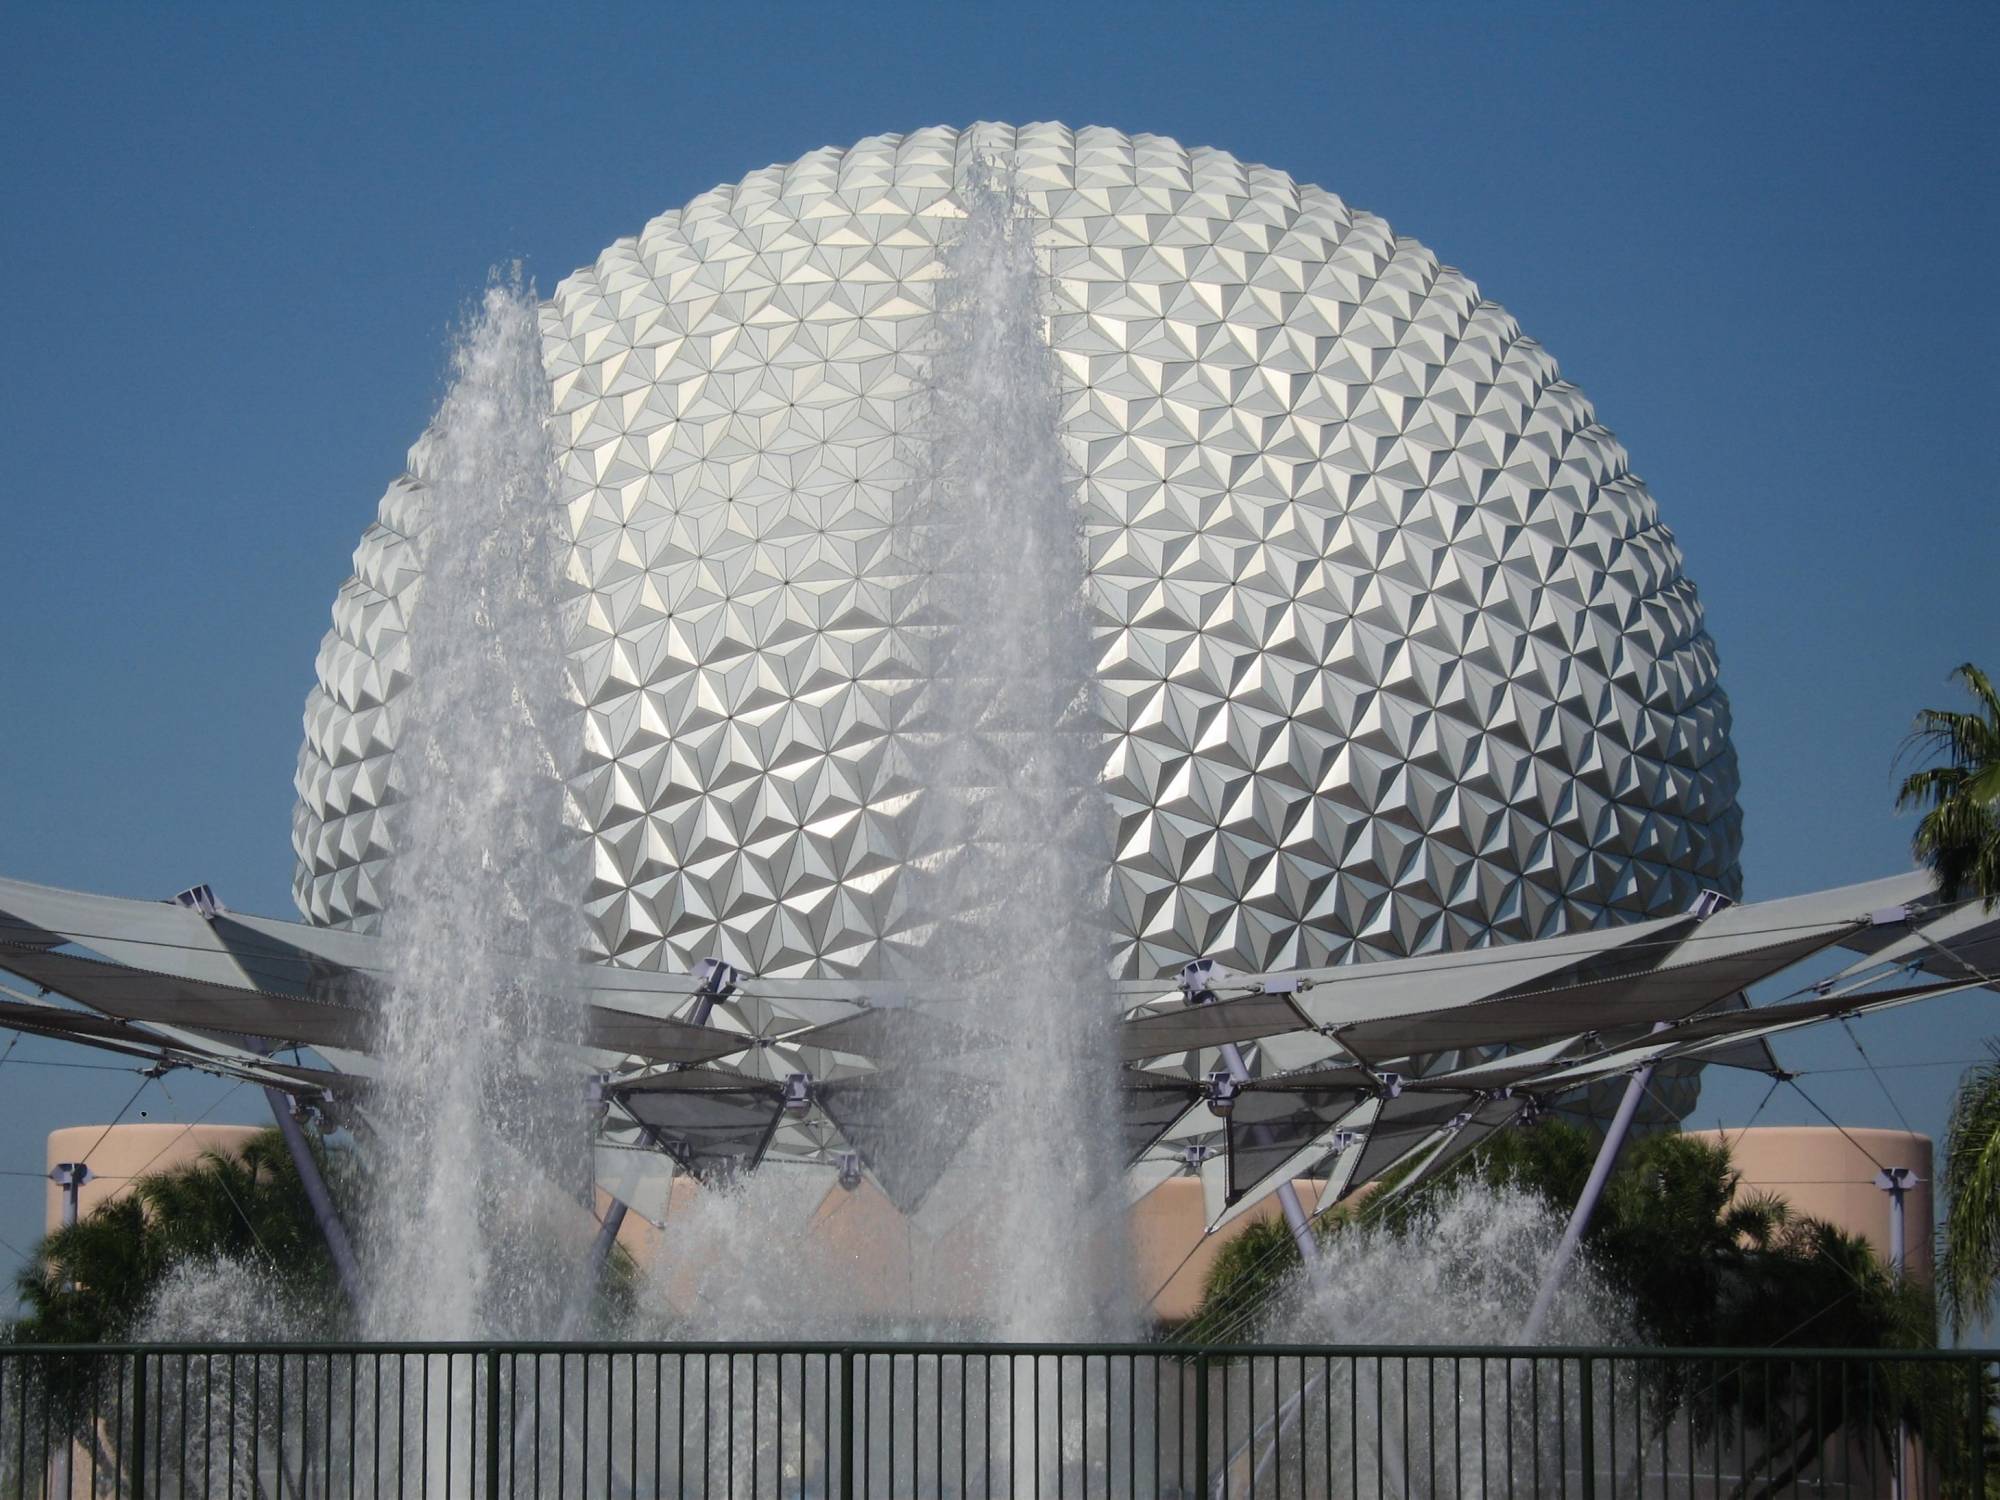 Tips on choosing an on-property resort at Walt Disney World | PassPorter.com